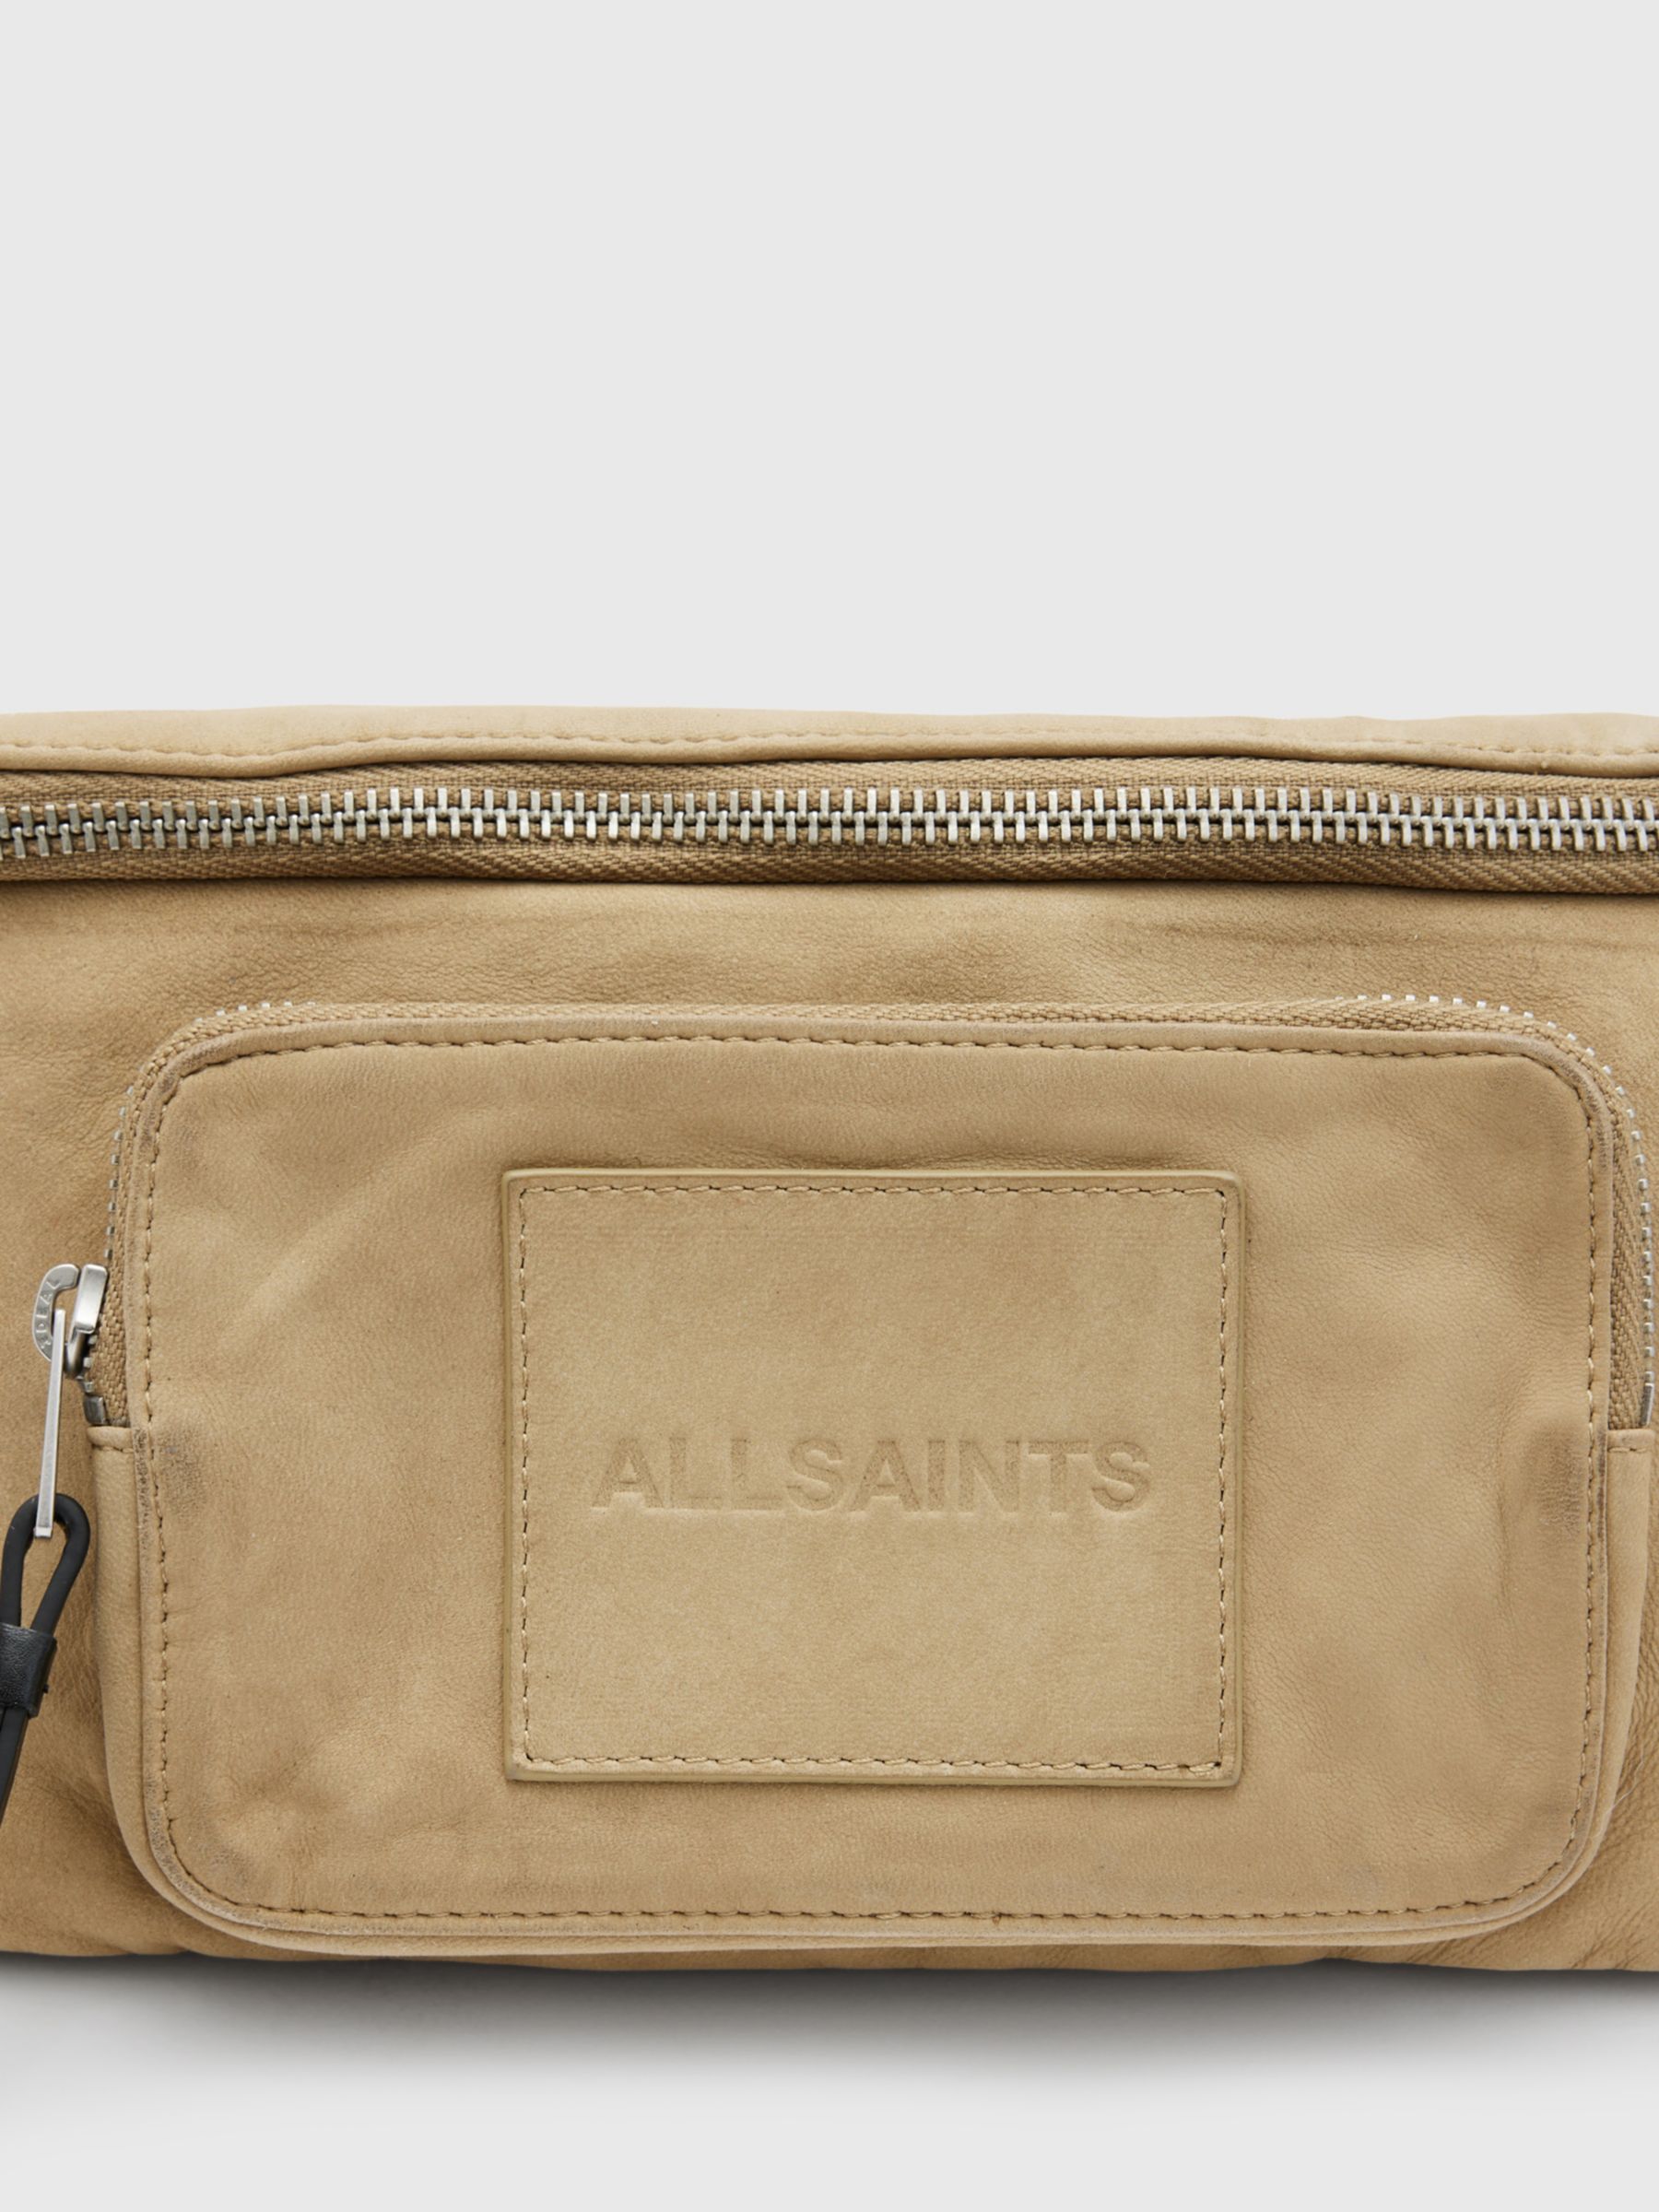 AllSaints Konan Leather Bumbag, Sand Beige, One Size